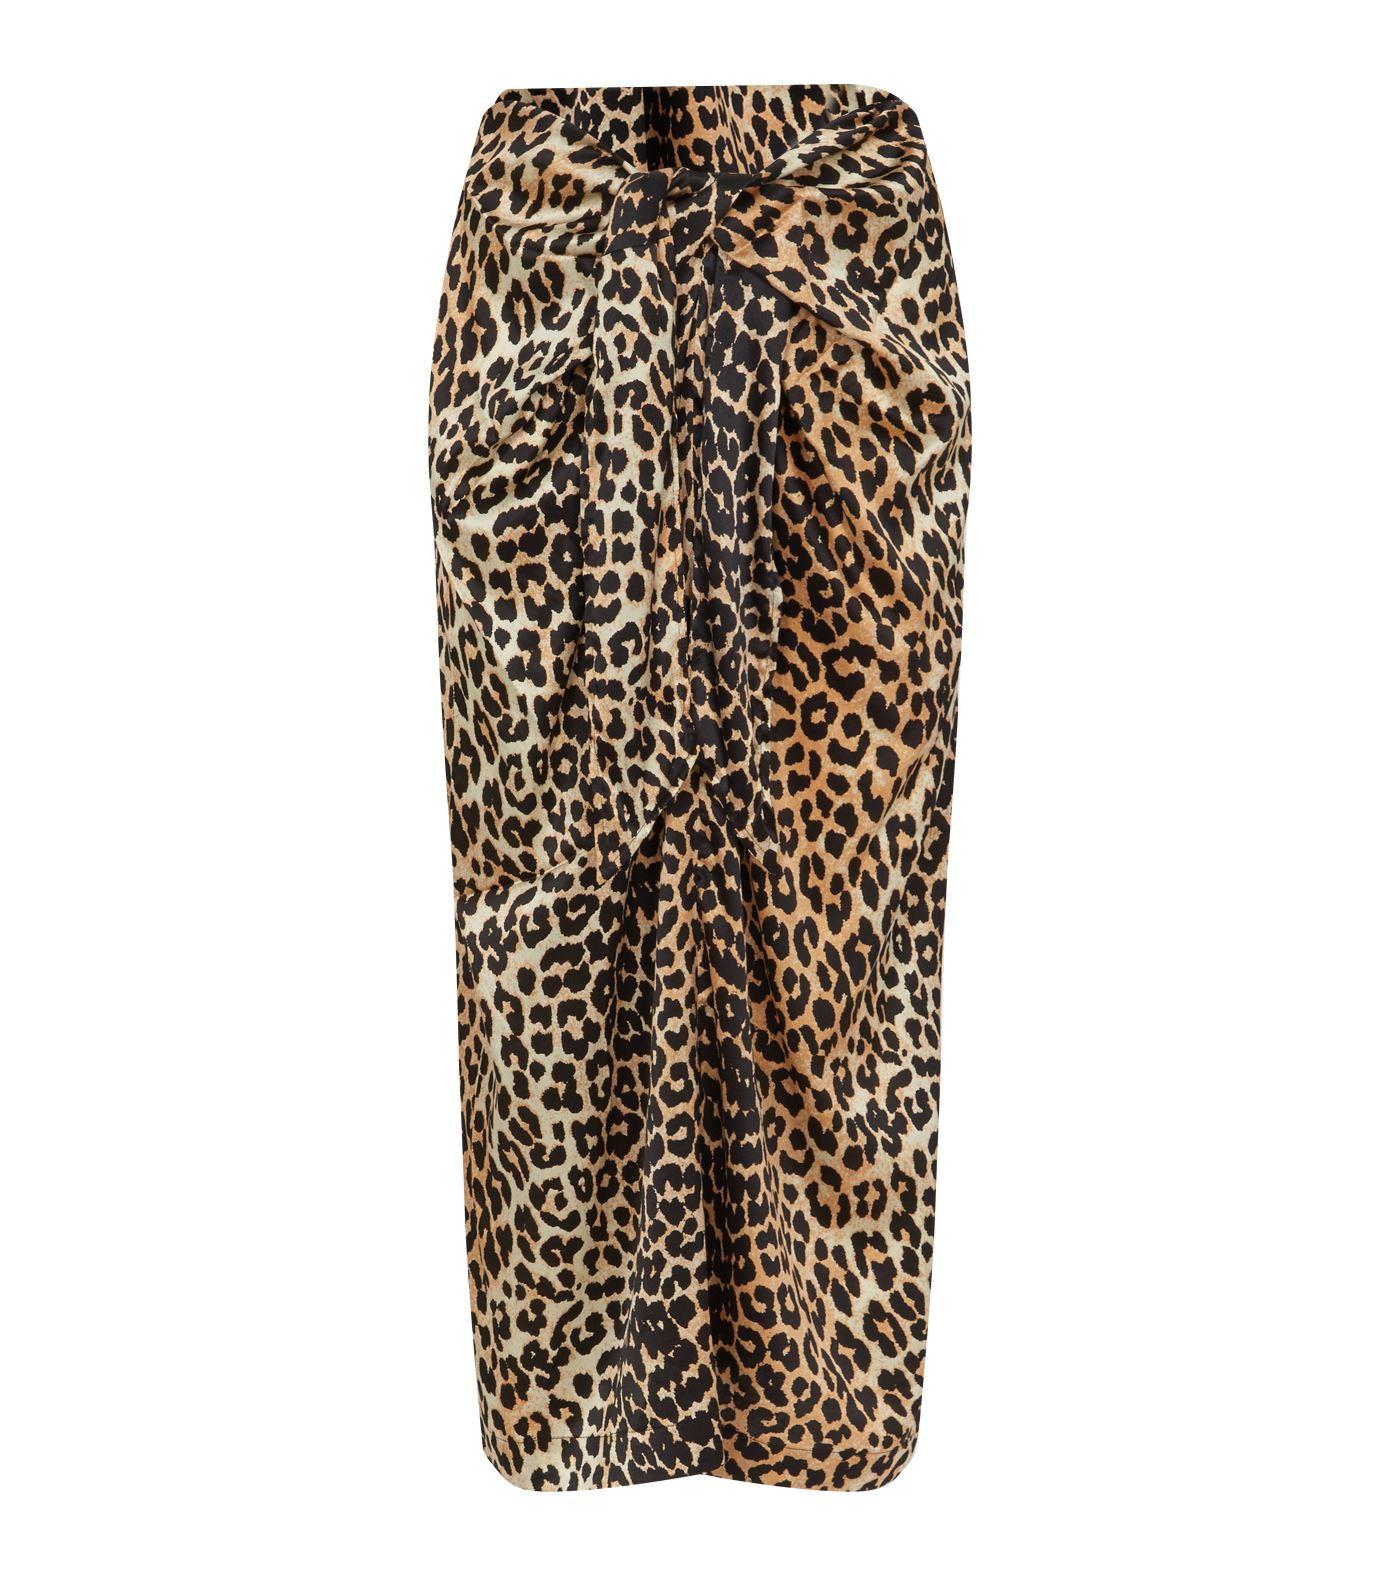 Ganni Silk Leopard Print Skirt in Brown - Lyst